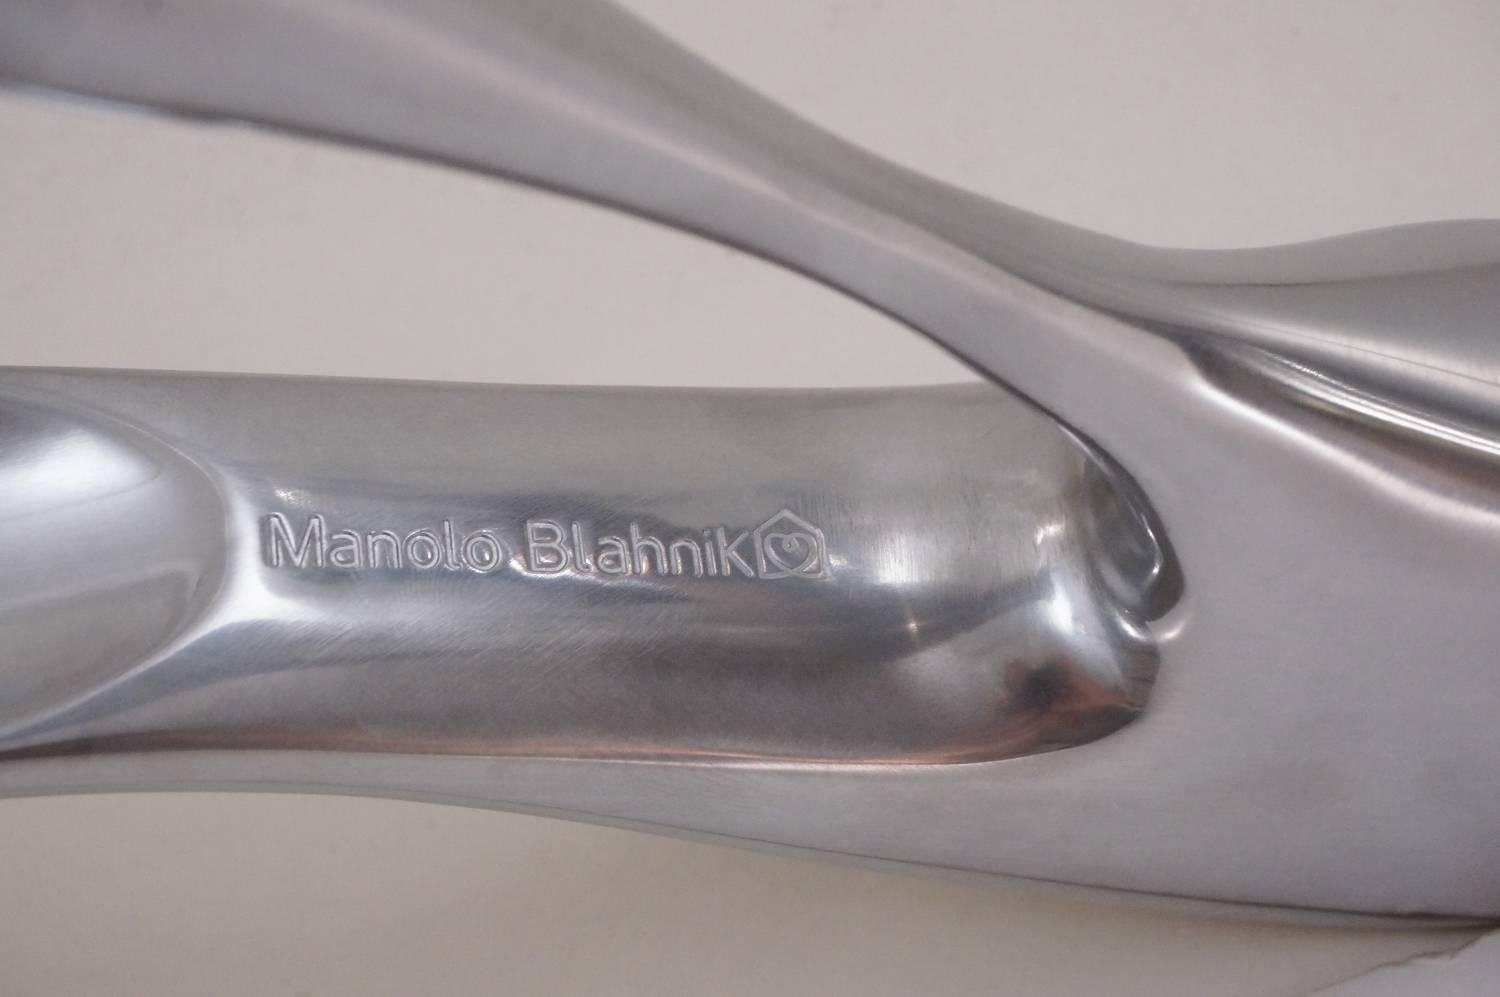 British Manolo Blahnik Shoe Horn Aluminium with Original Box, 2004, English